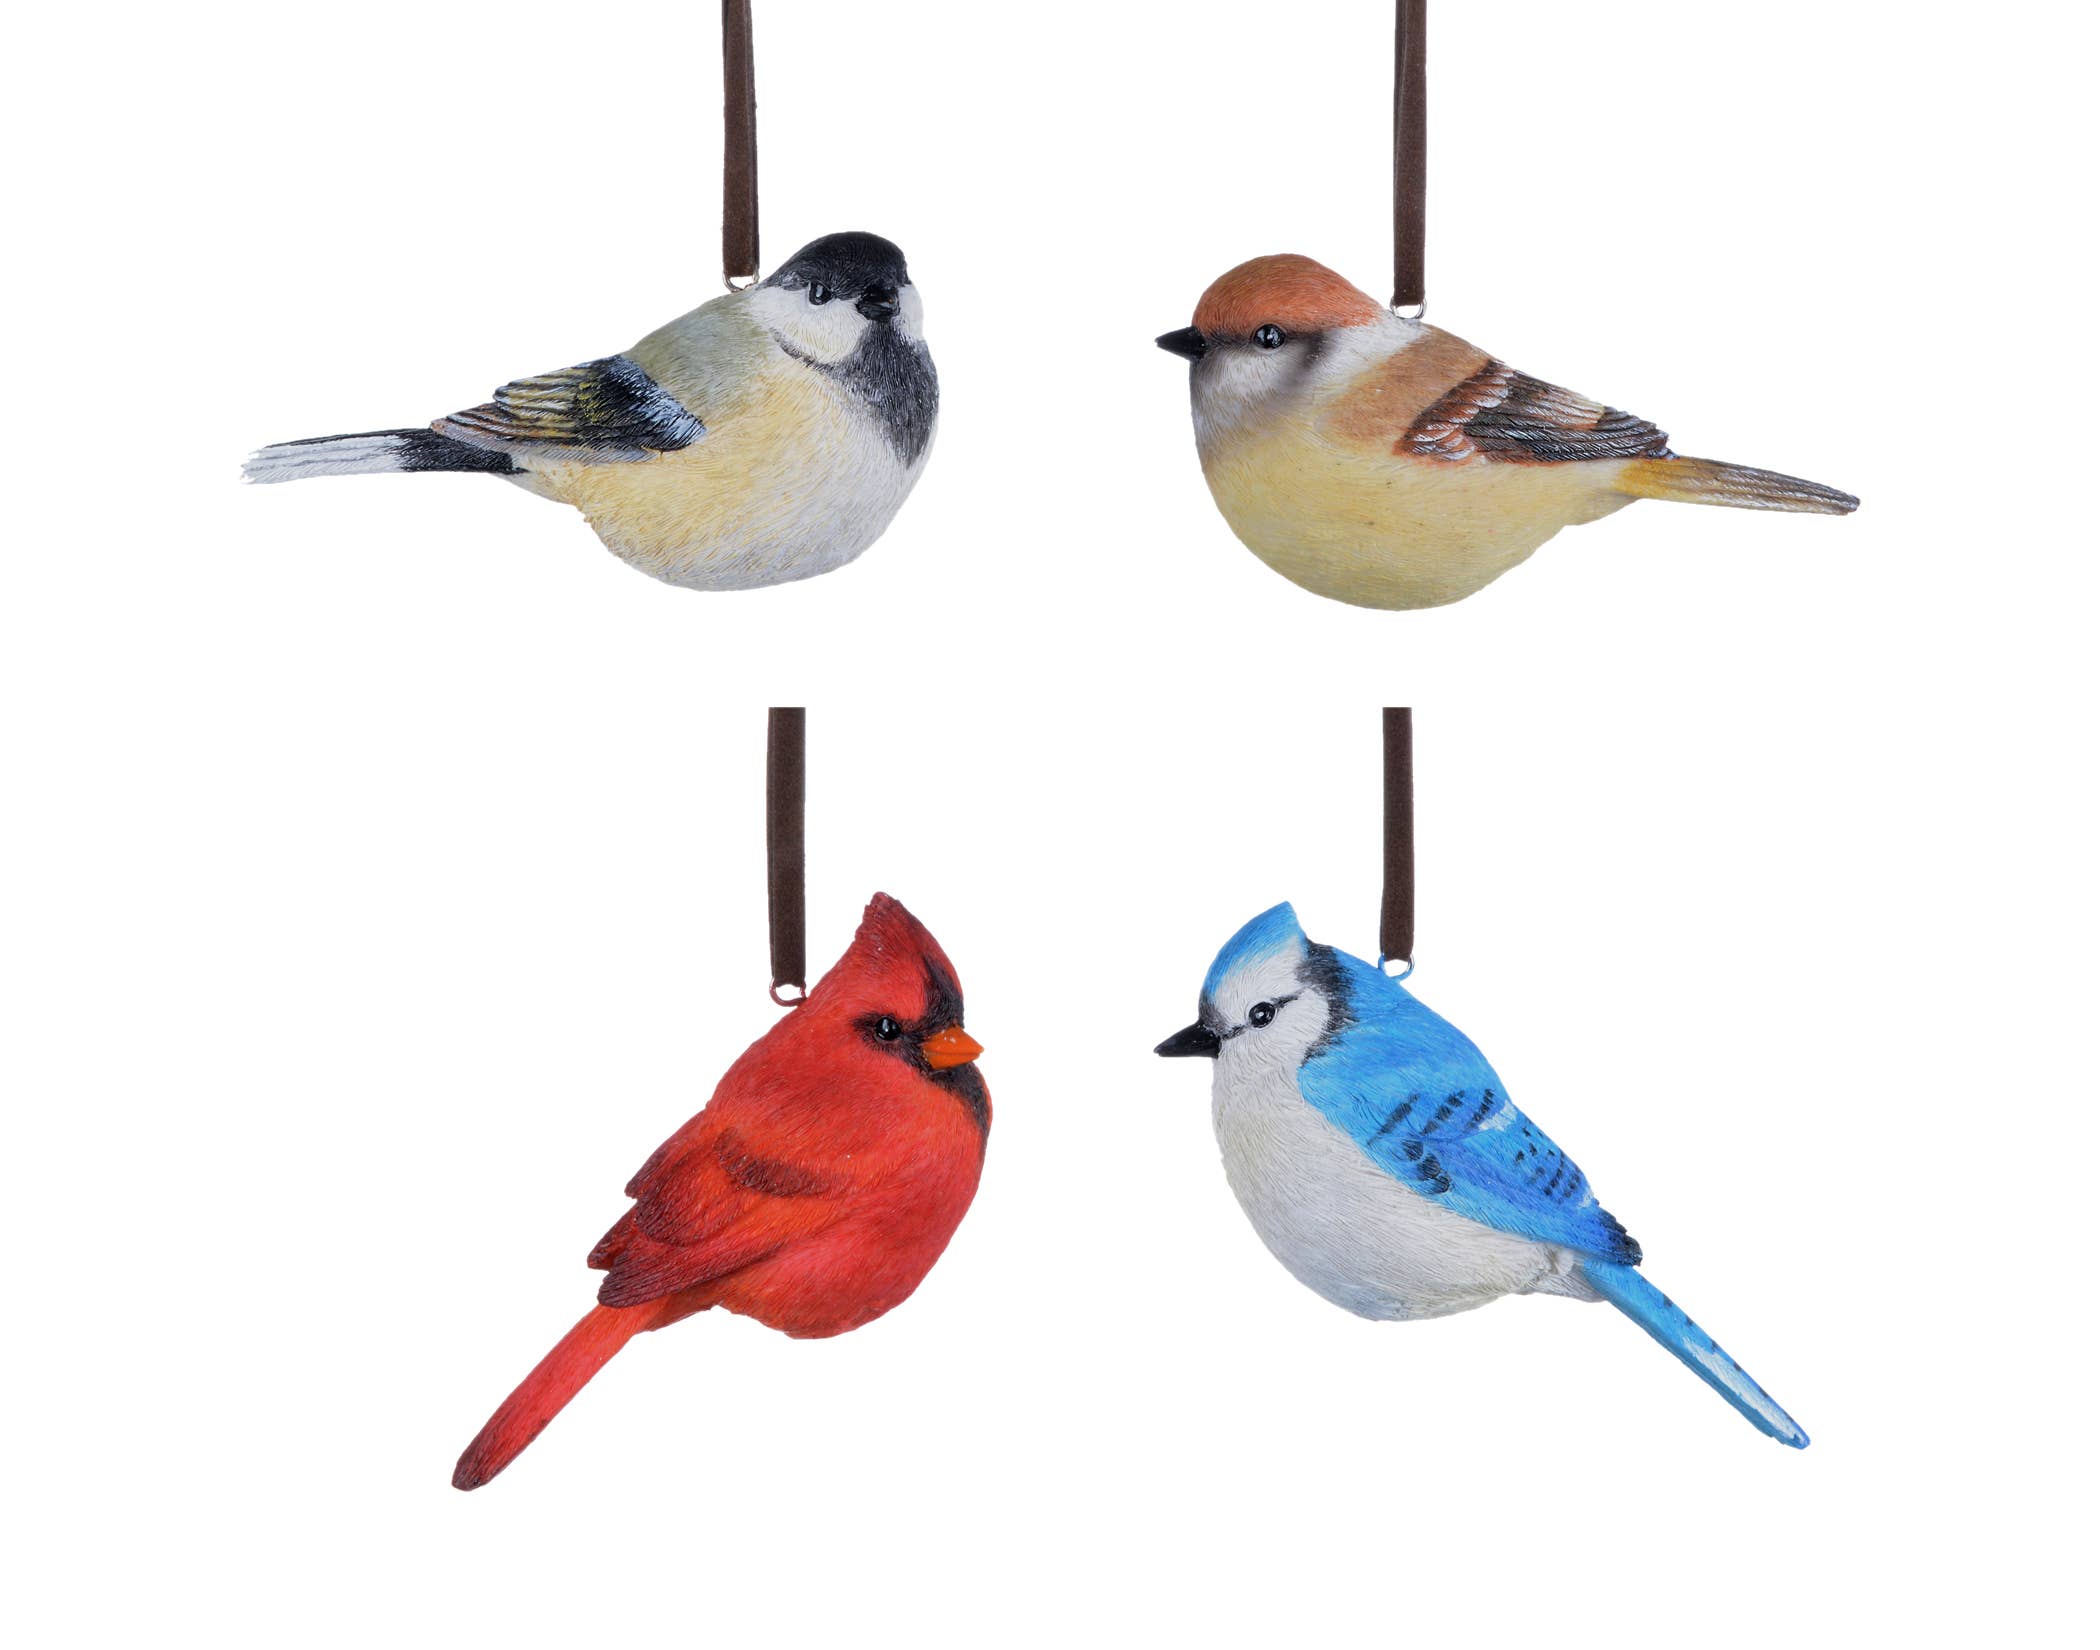 Ornament: 4.5" Cardinal Songbird